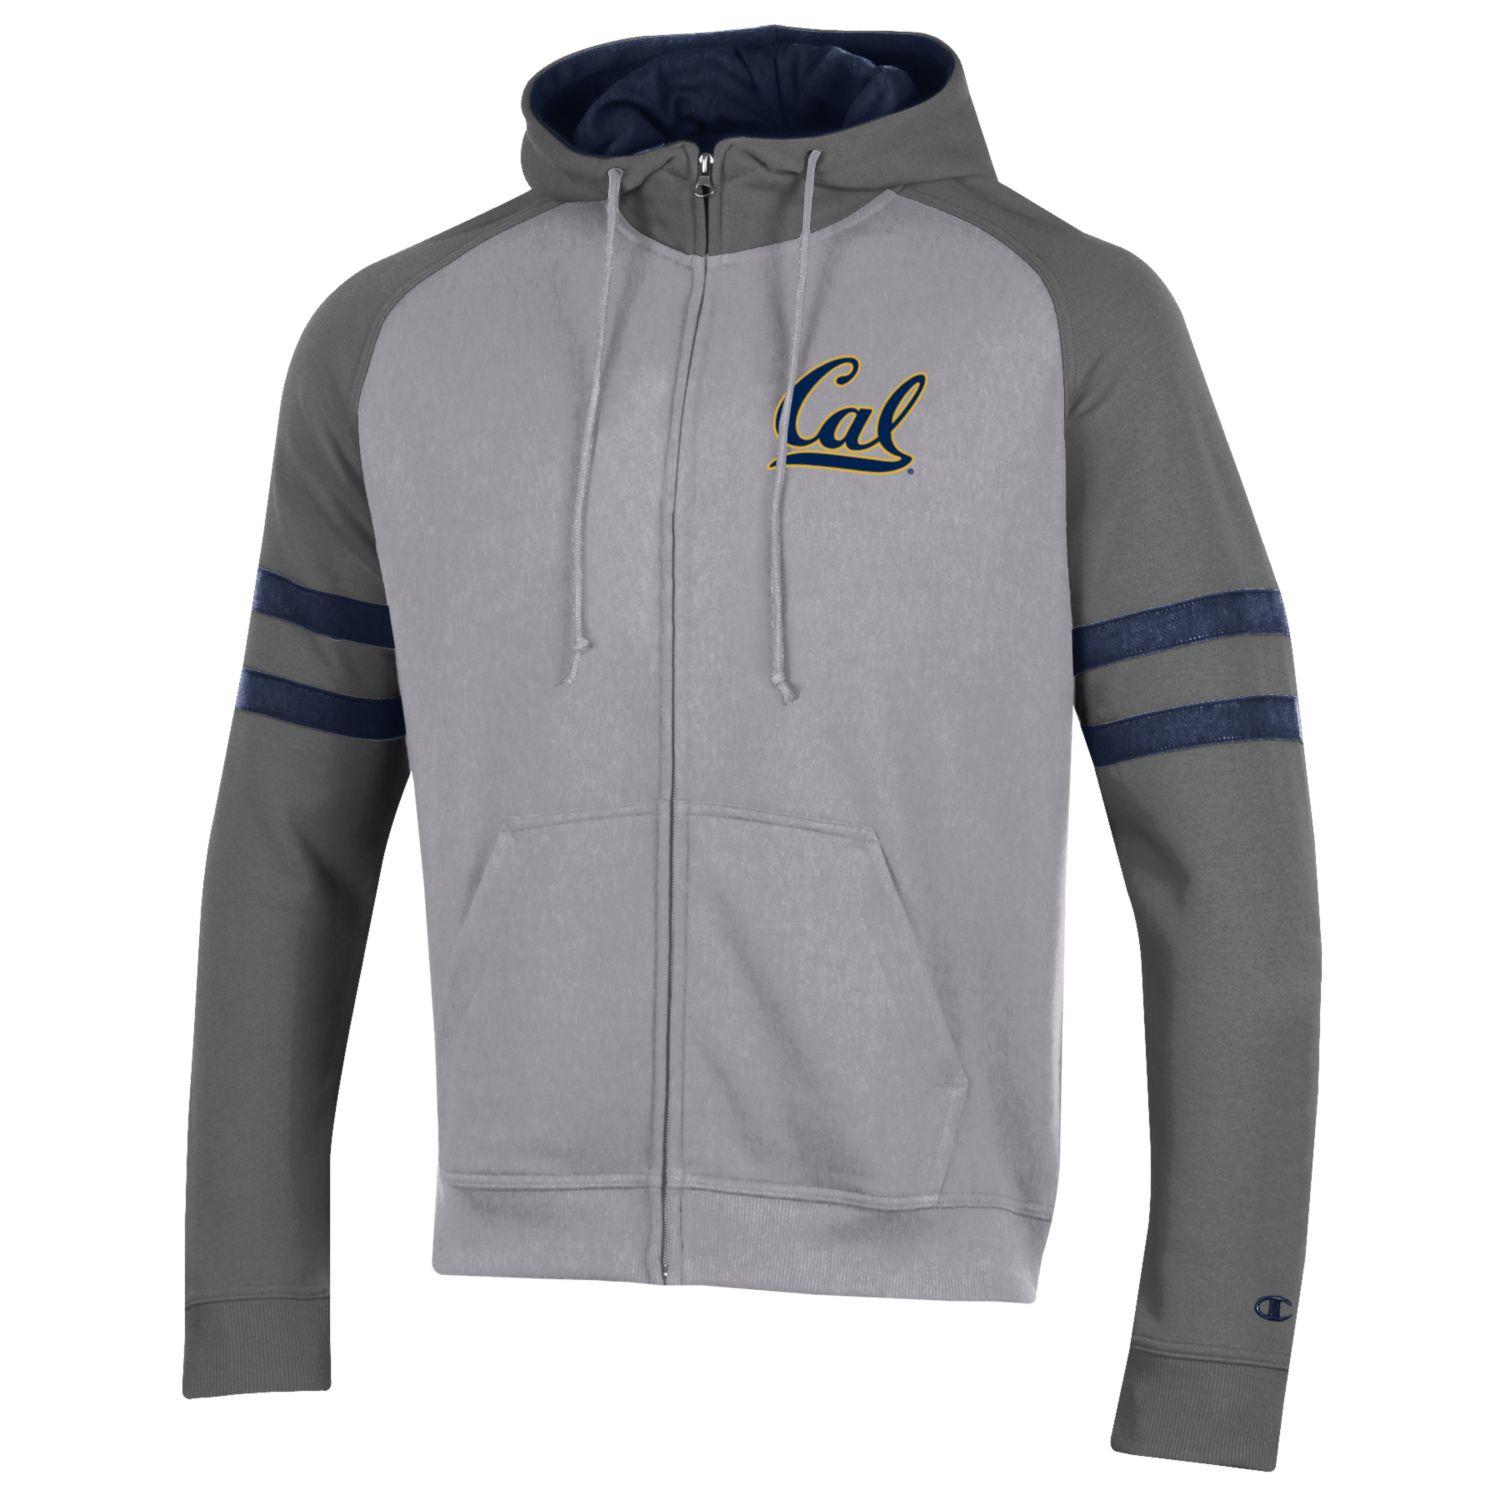 U.C. Berkeley Cal Embroidered Champion Zip-Up hoodie sweatshirt-Gray ...